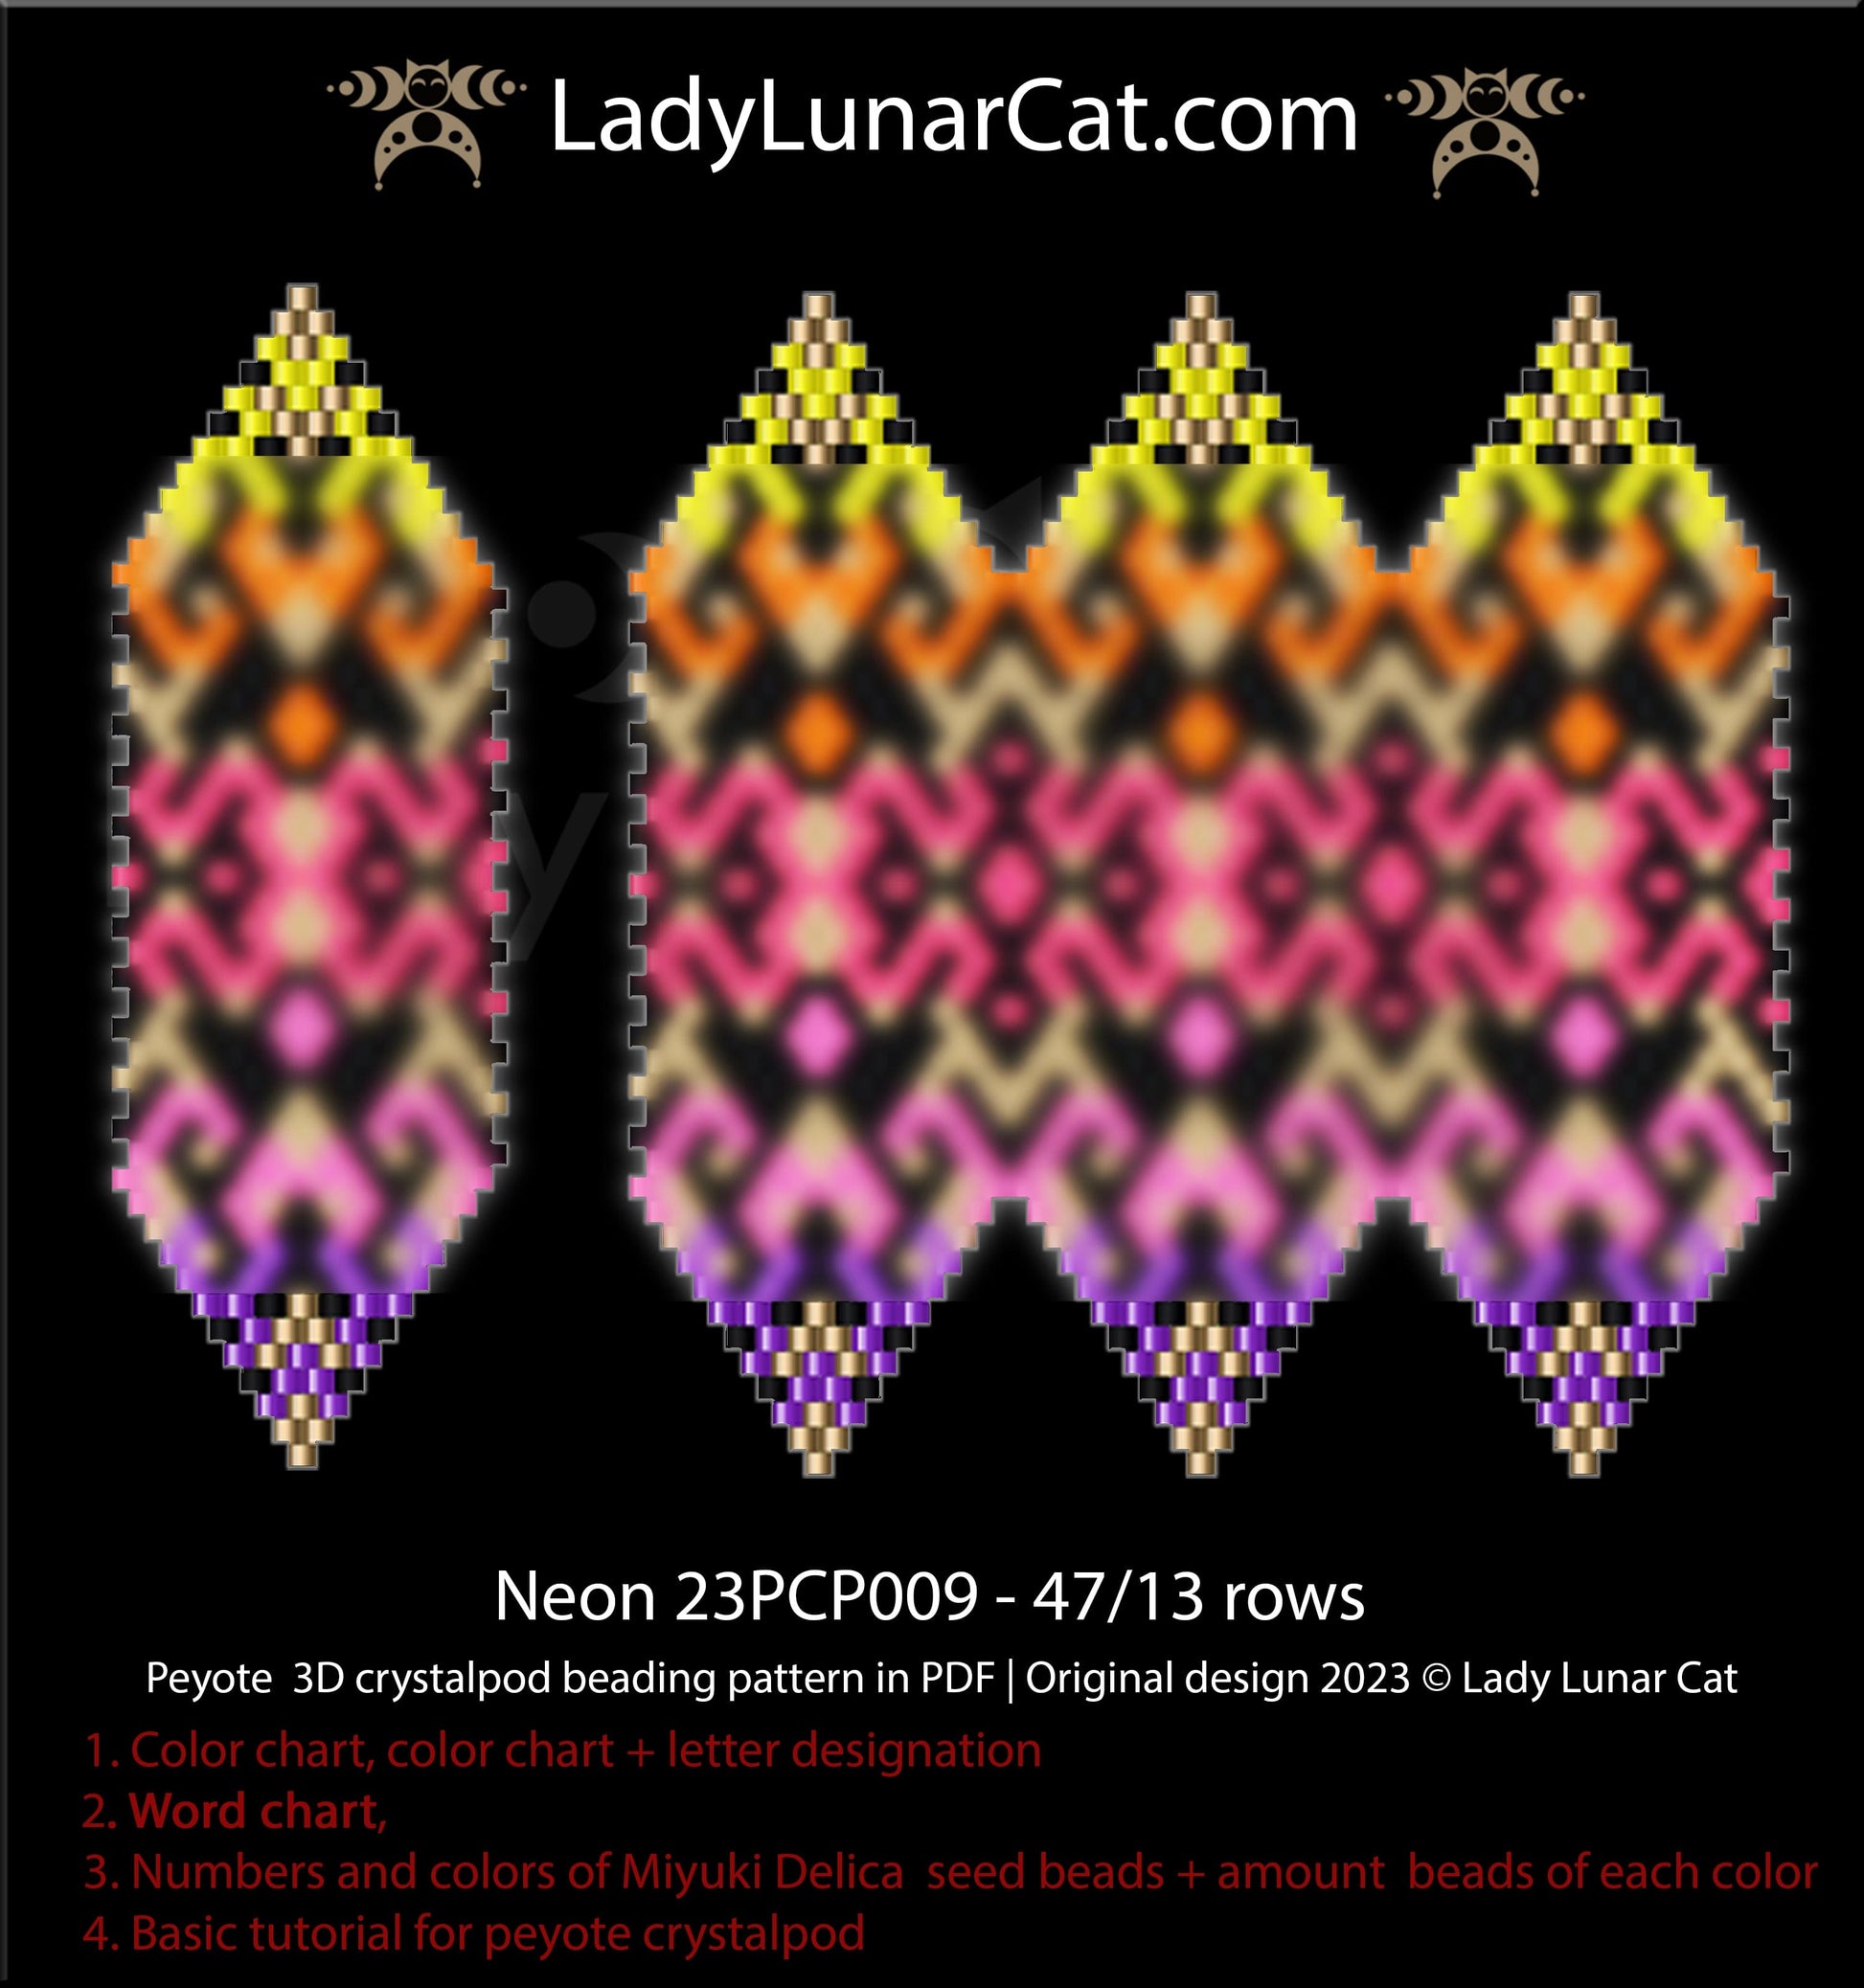 Peyote pod pattern or crystalpod pattern for beading LadyLunarCat